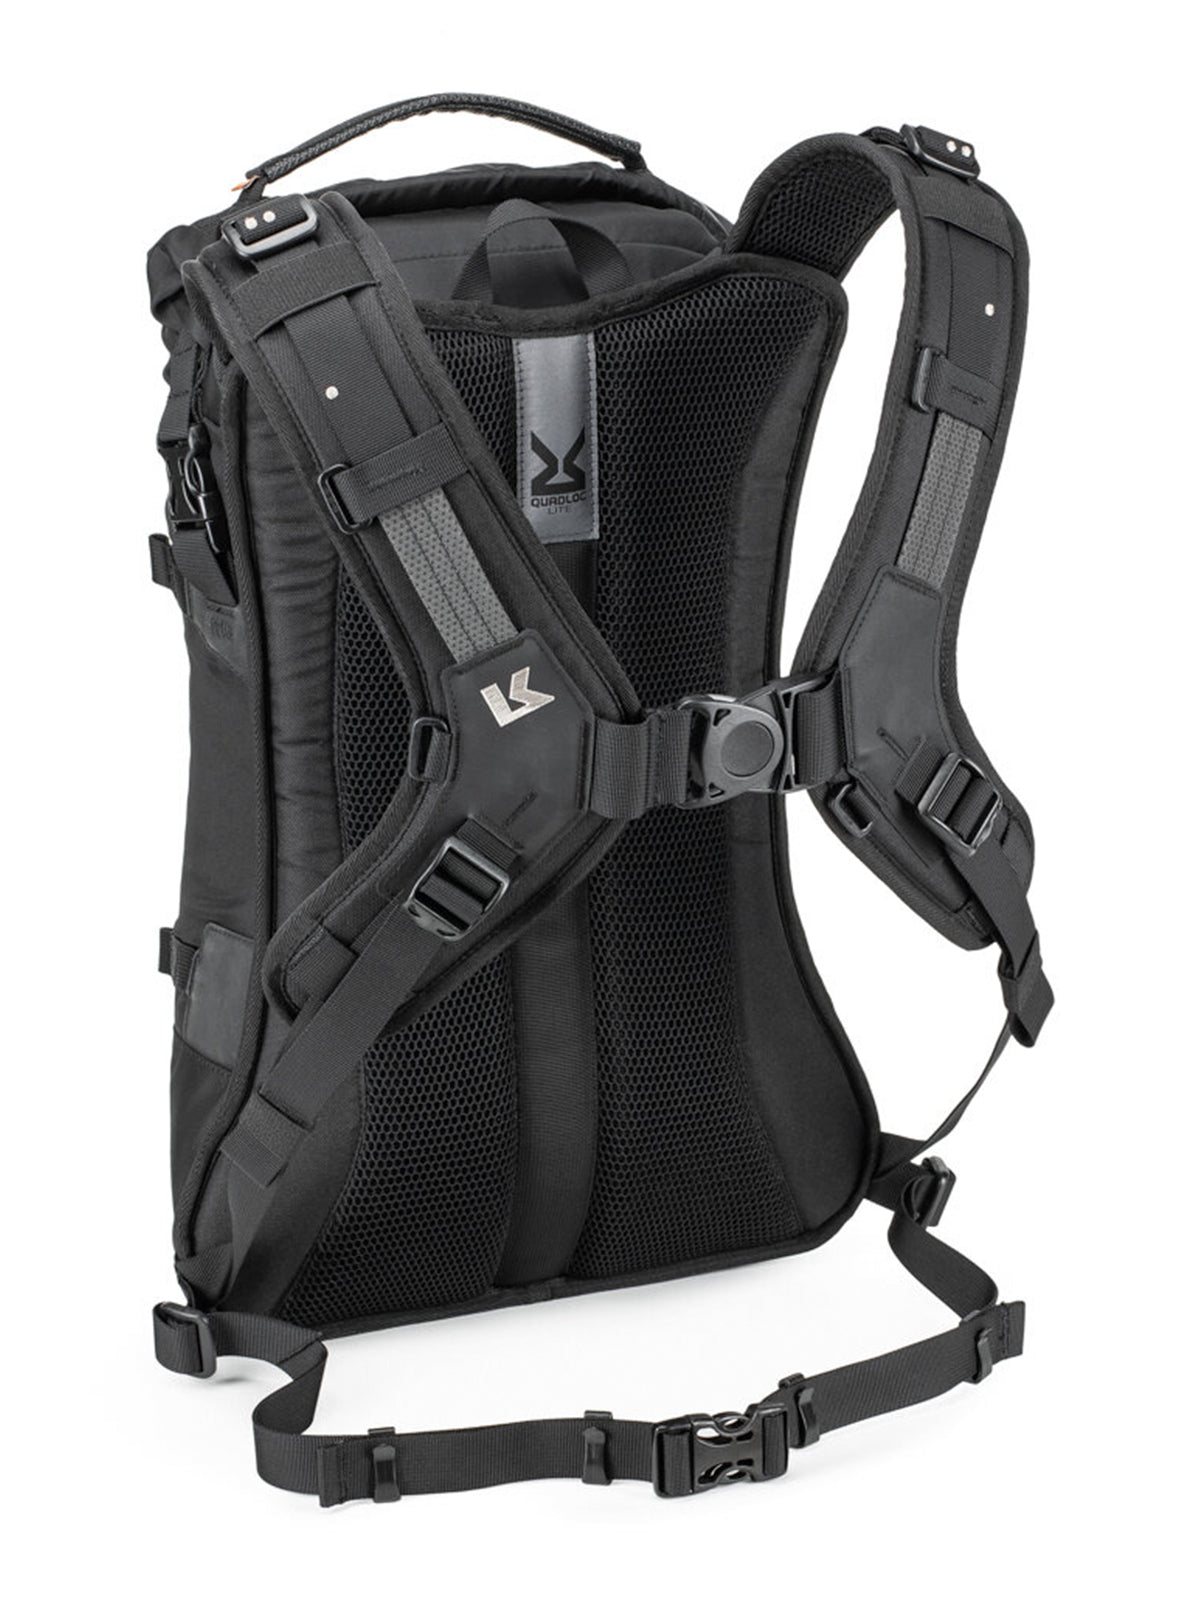 Kriega R16 Backpack harness